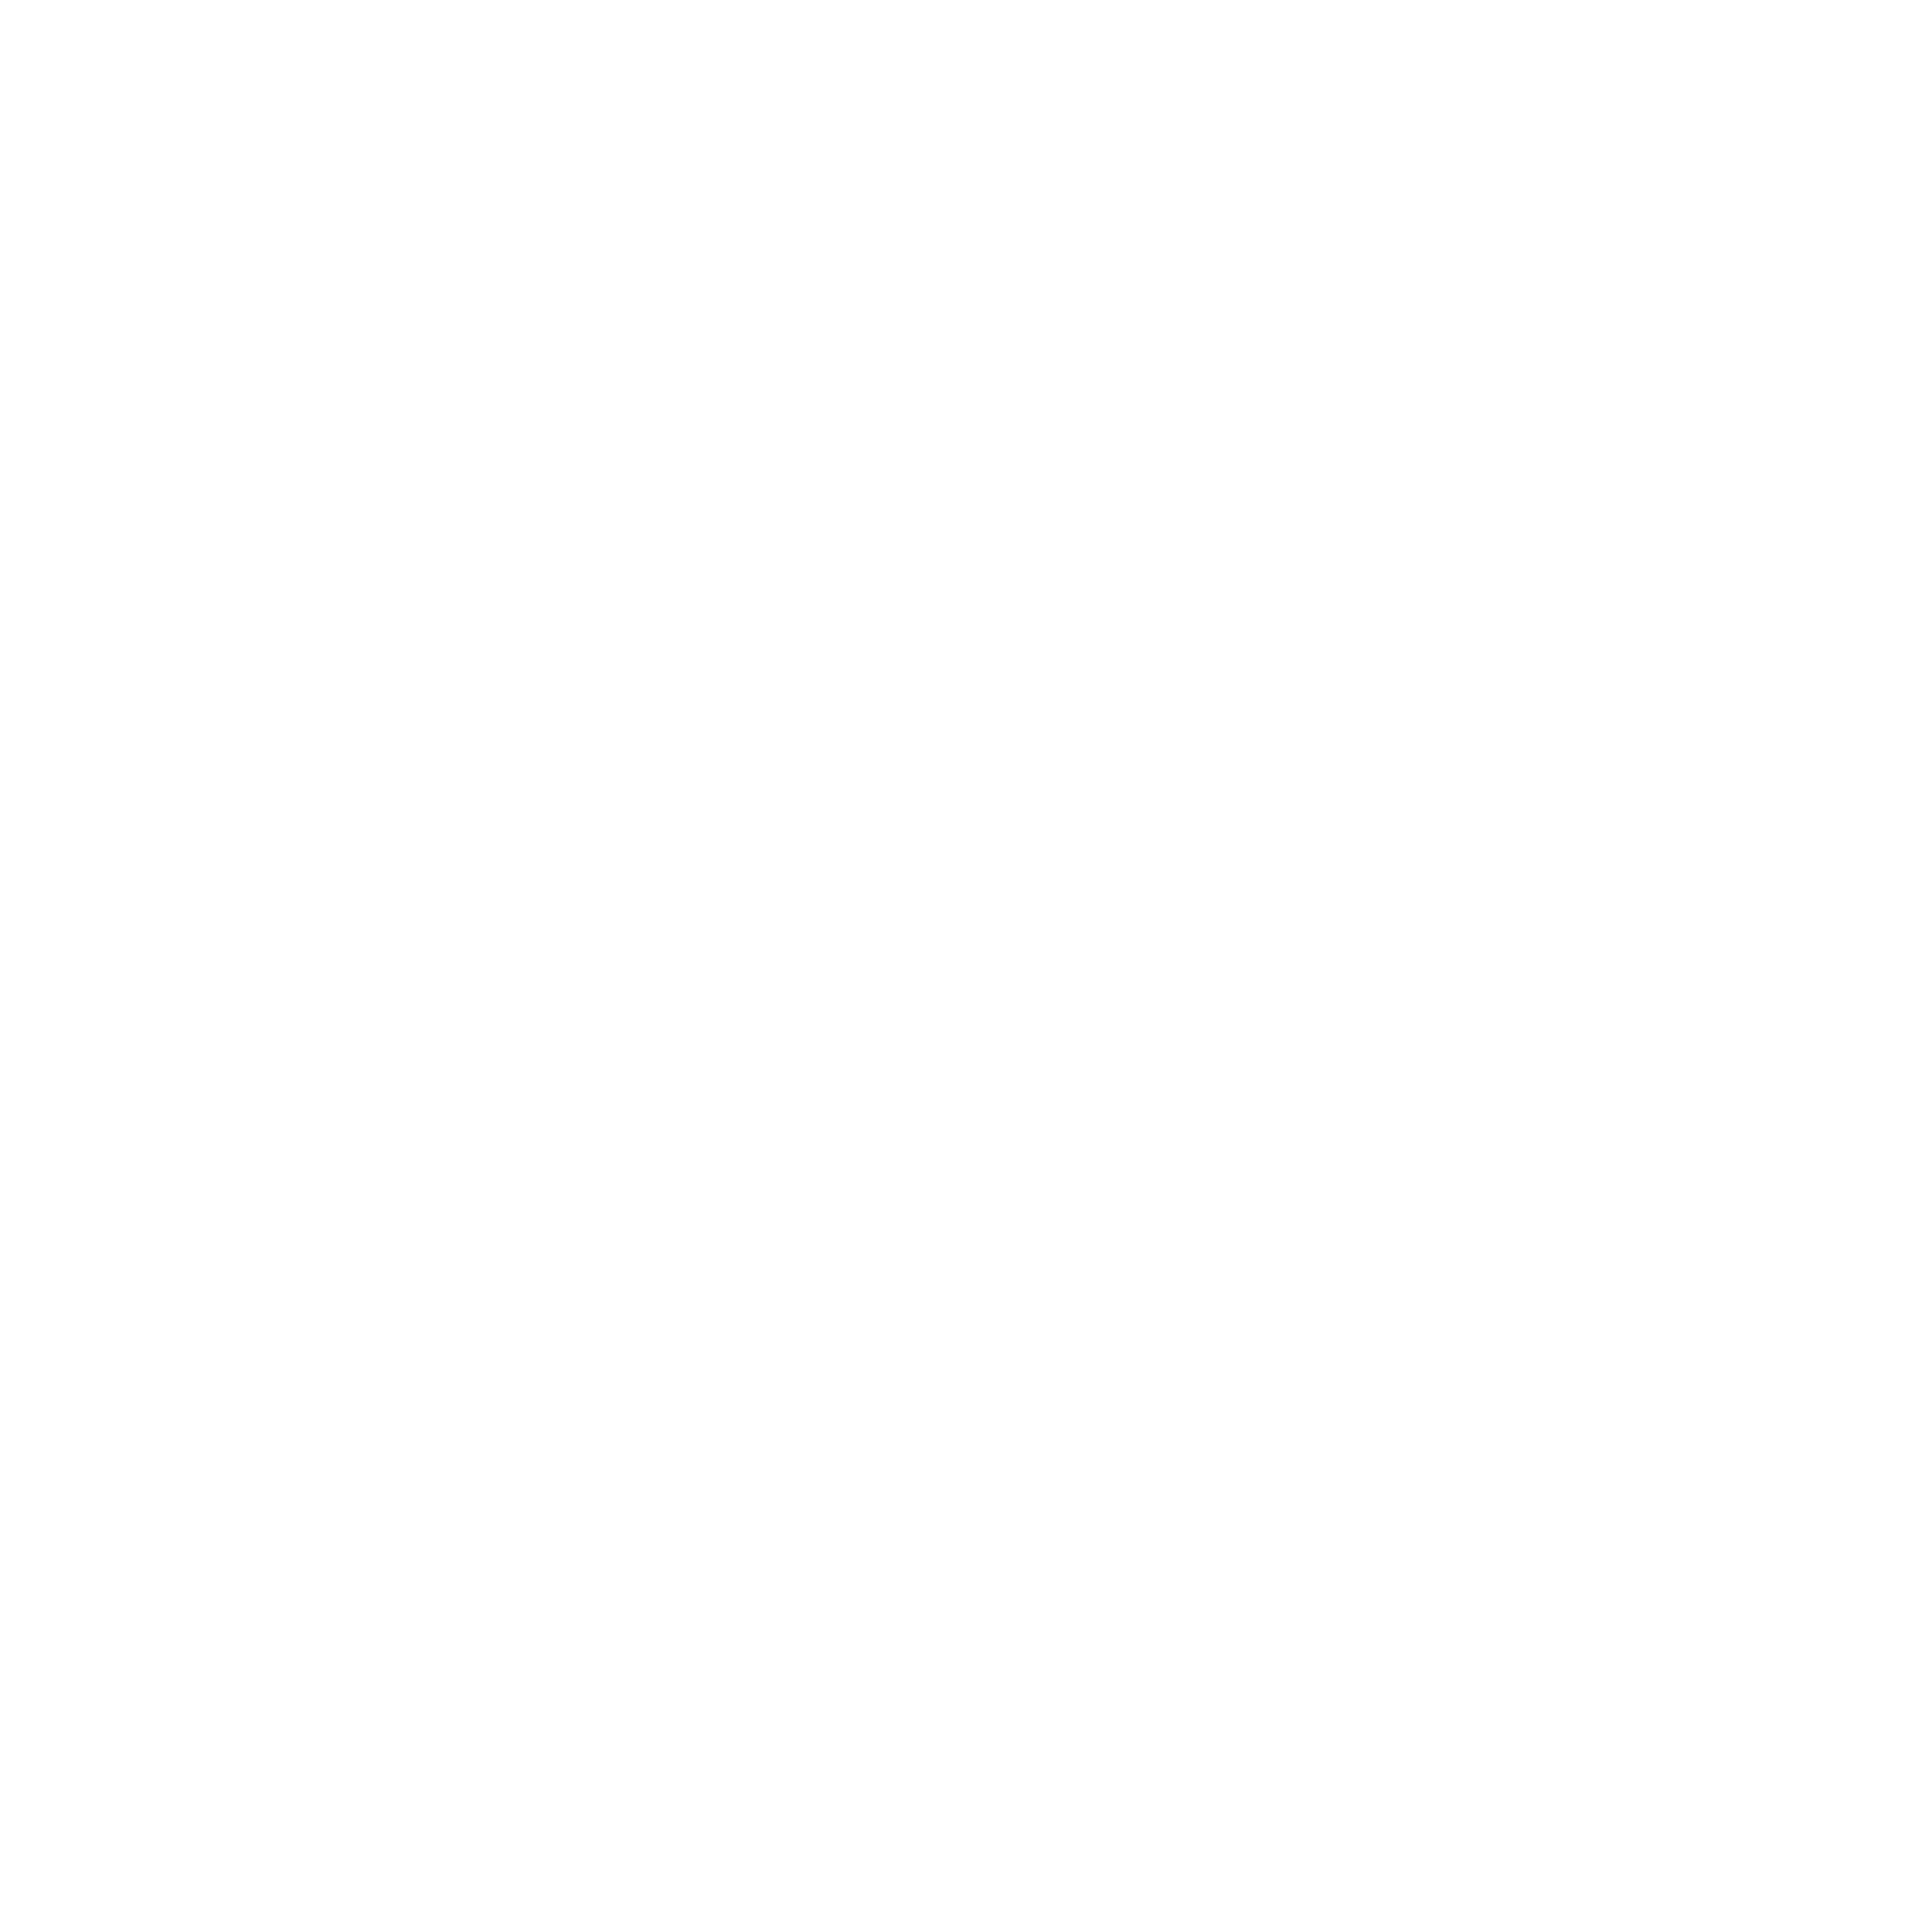 Amsterdamse Frisdrank Fabriek